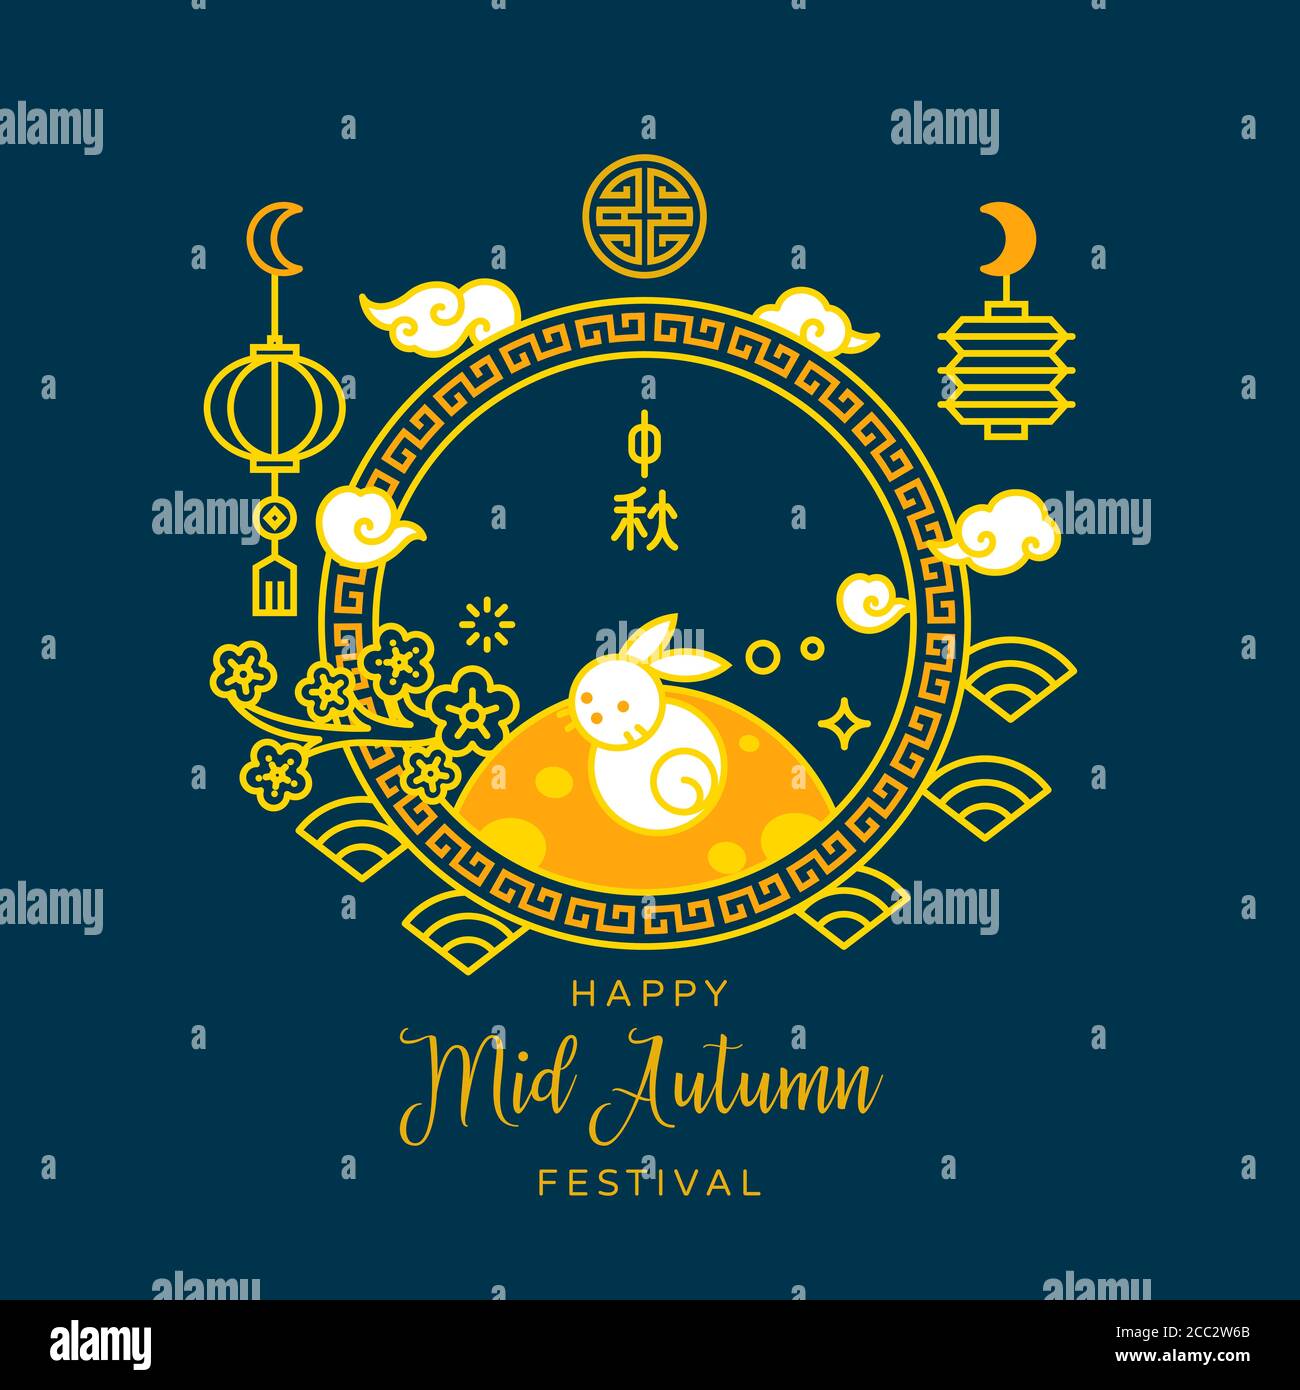 Mid autumn celebration badge vector background. Chinese lunar moon festival flat line art for card invitation, banner. Little bunny on the moon illust Stock Vector